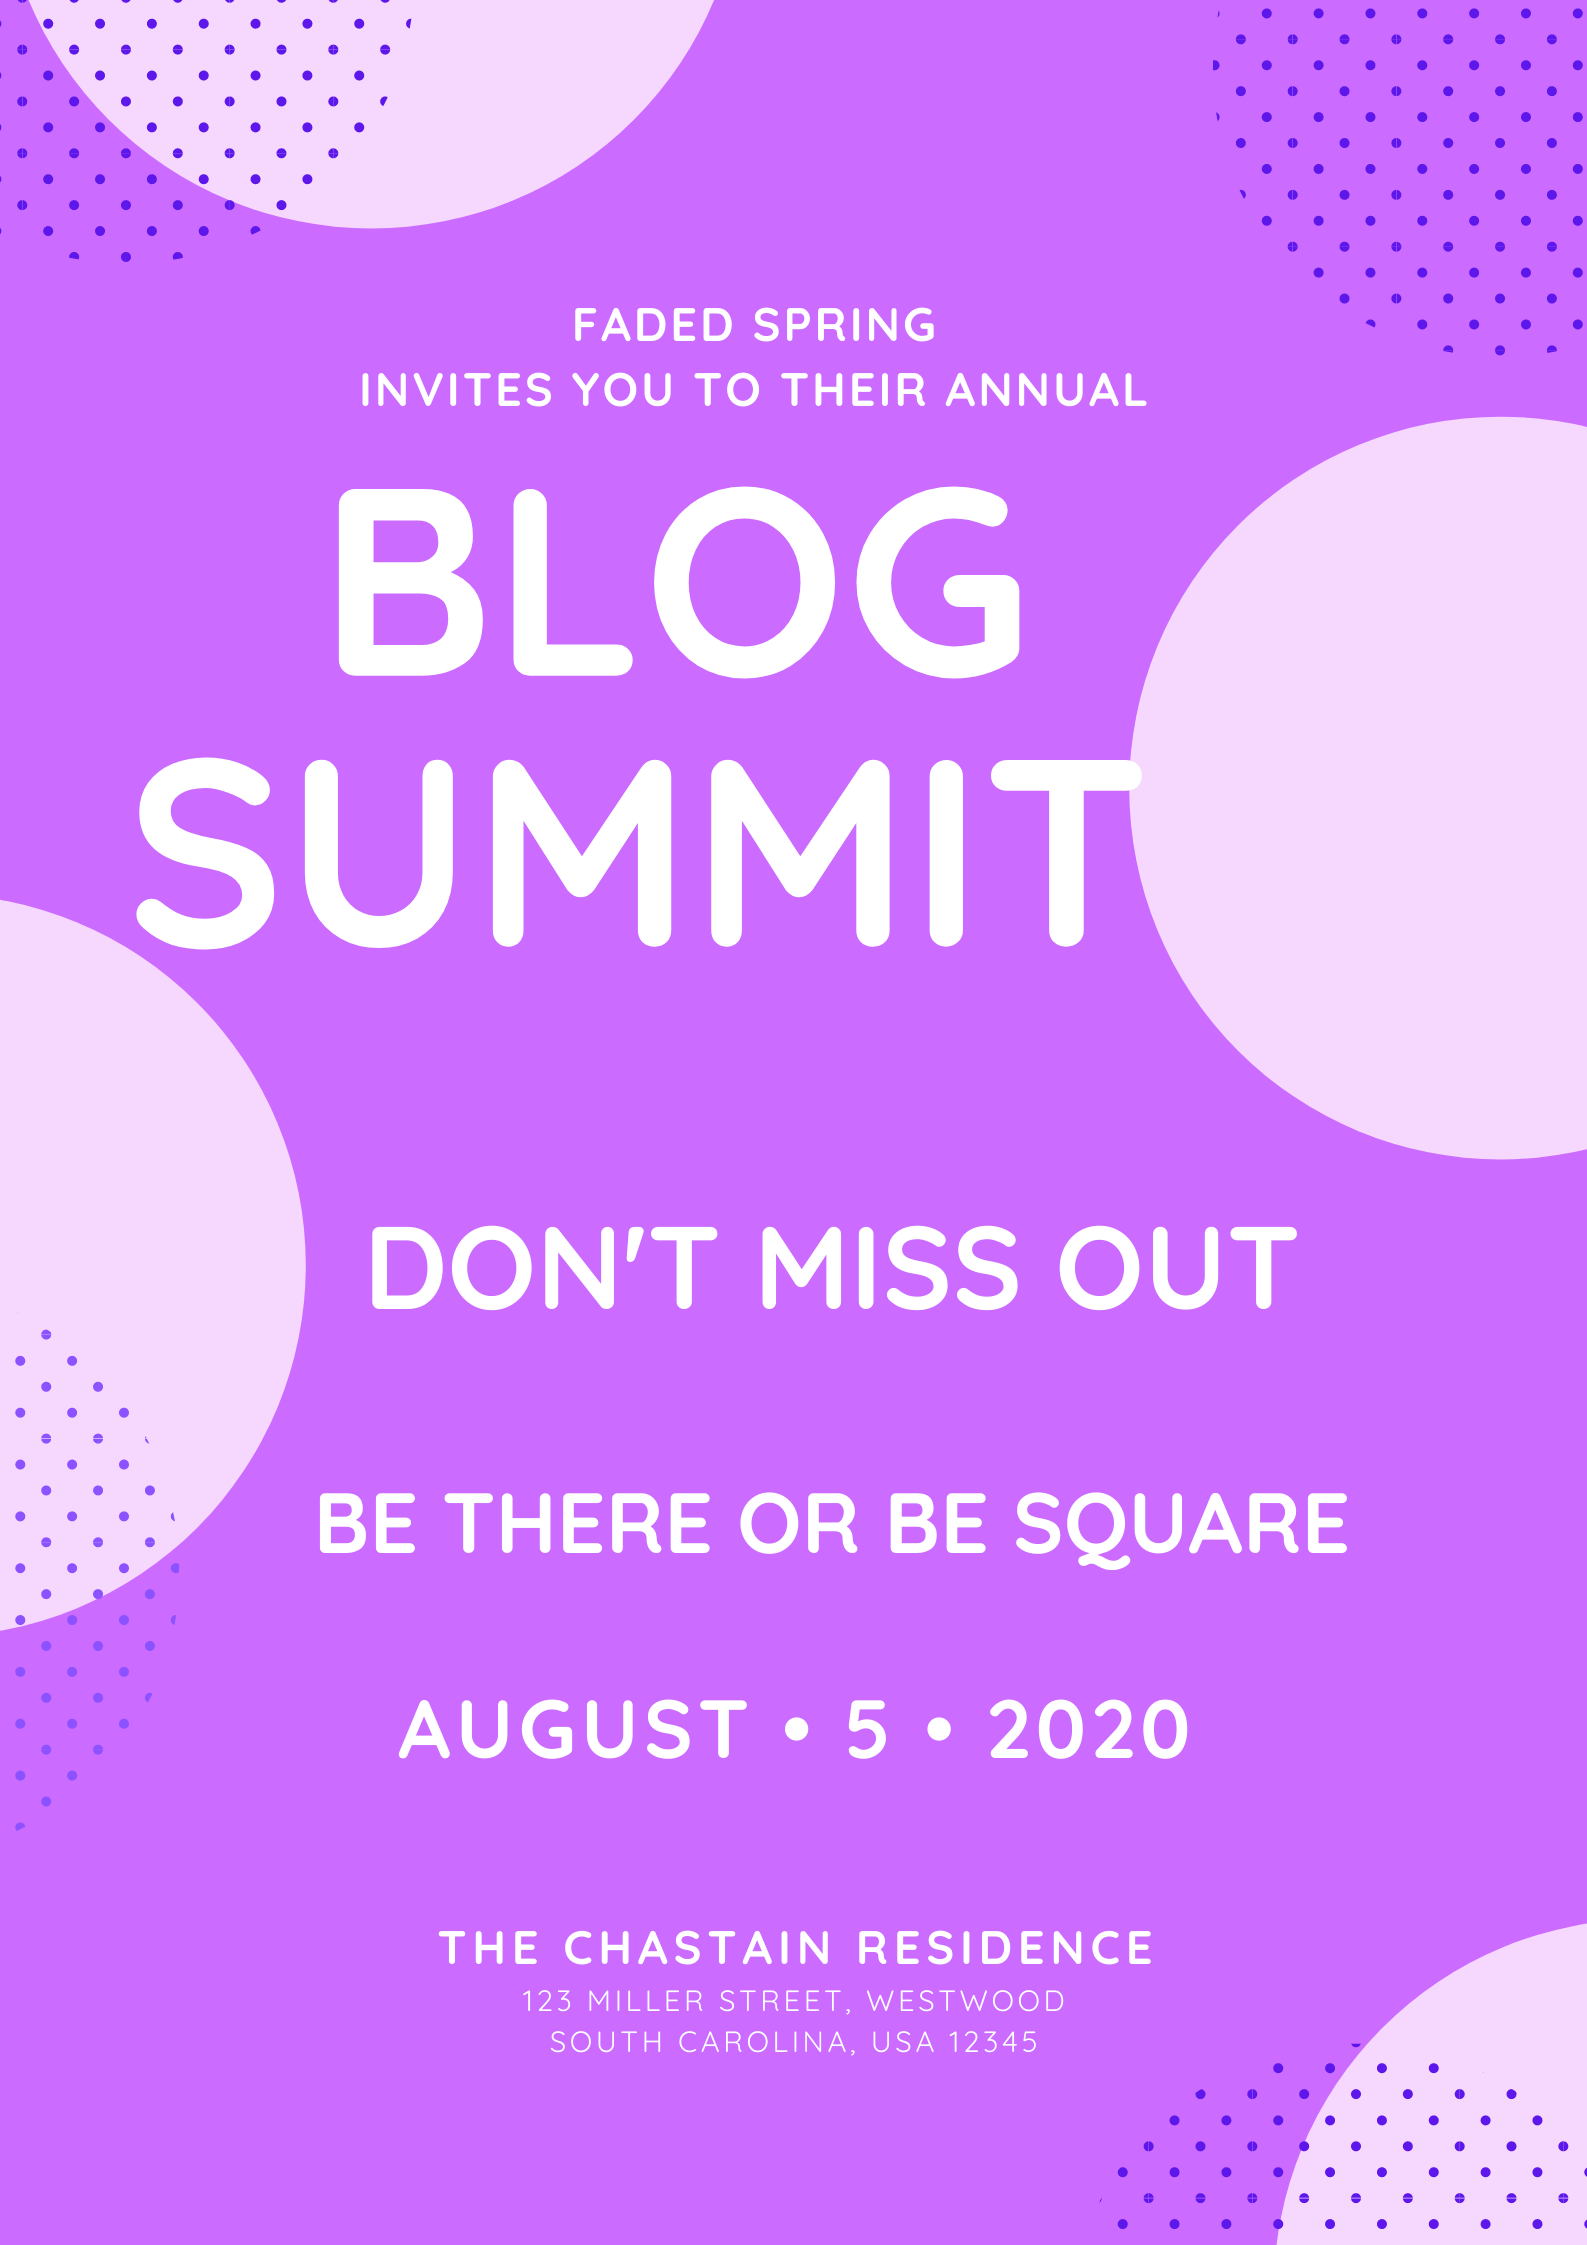 <img src="ana.jpg" alt="ana blog summit poster template"/> 